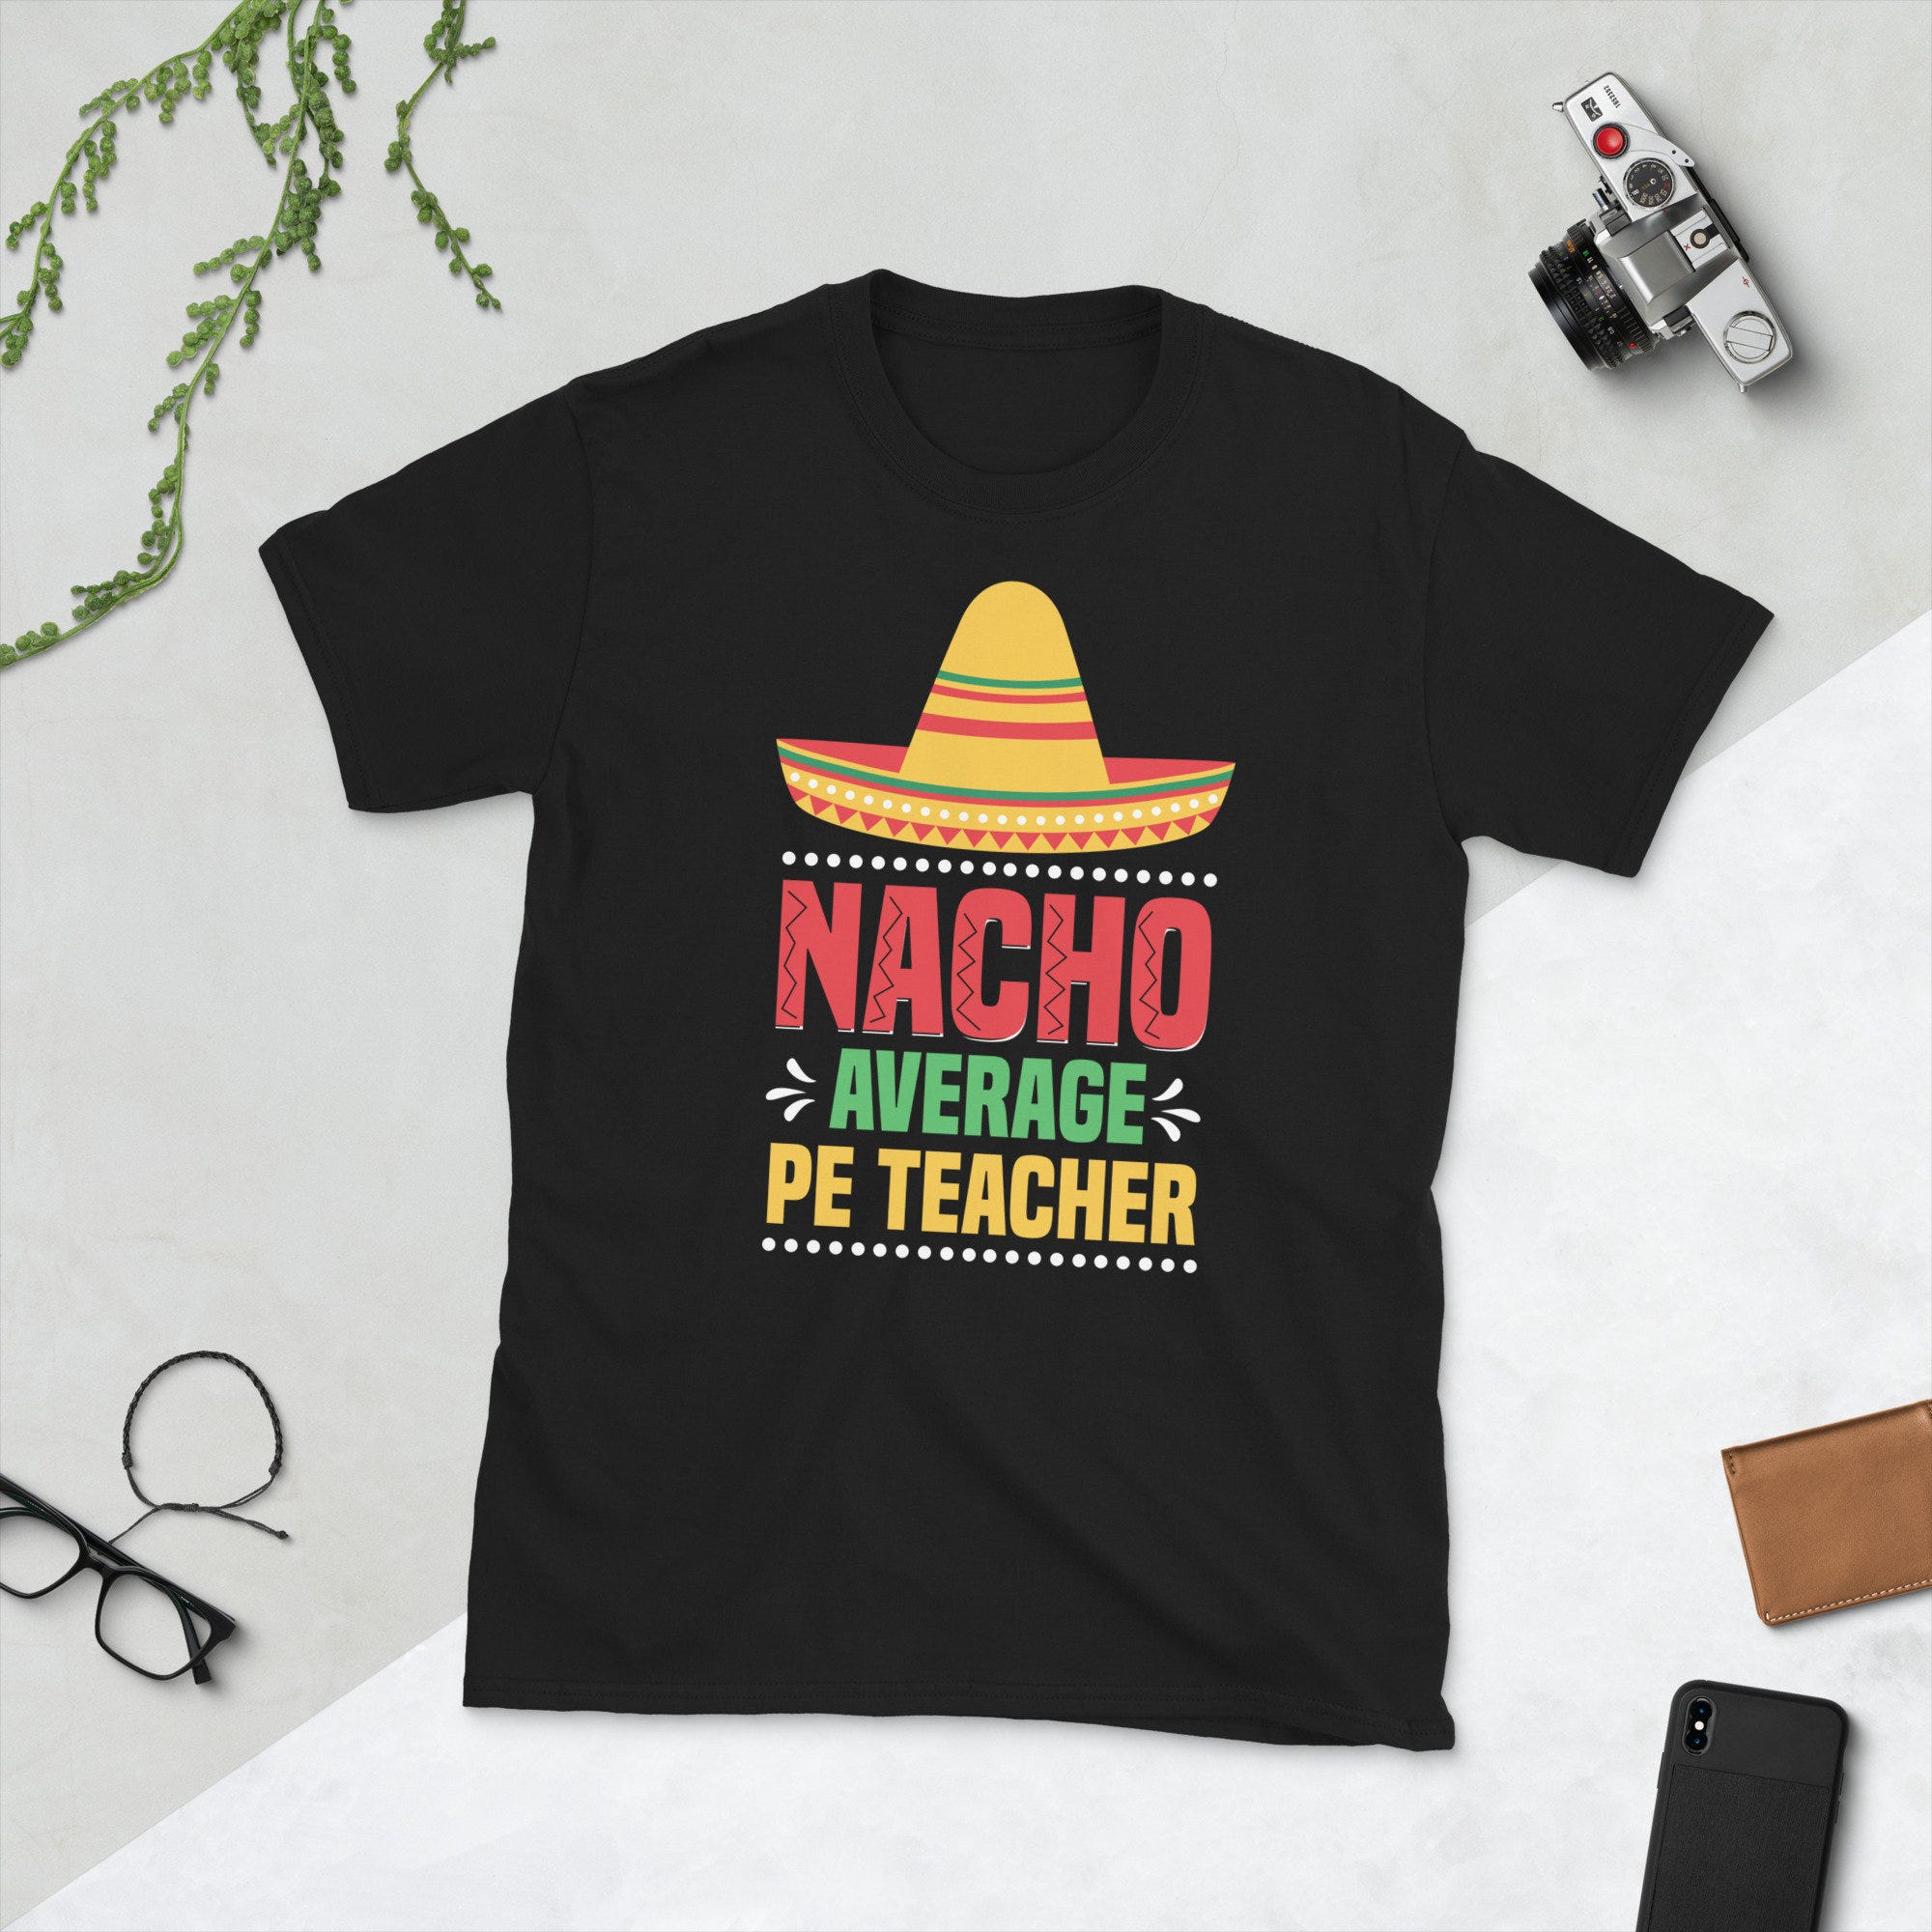 Nacho average PE teacher, nacho average, cinco de mayo, nachos, teacher, mexican food, mexico, nacho chips, nachos lover